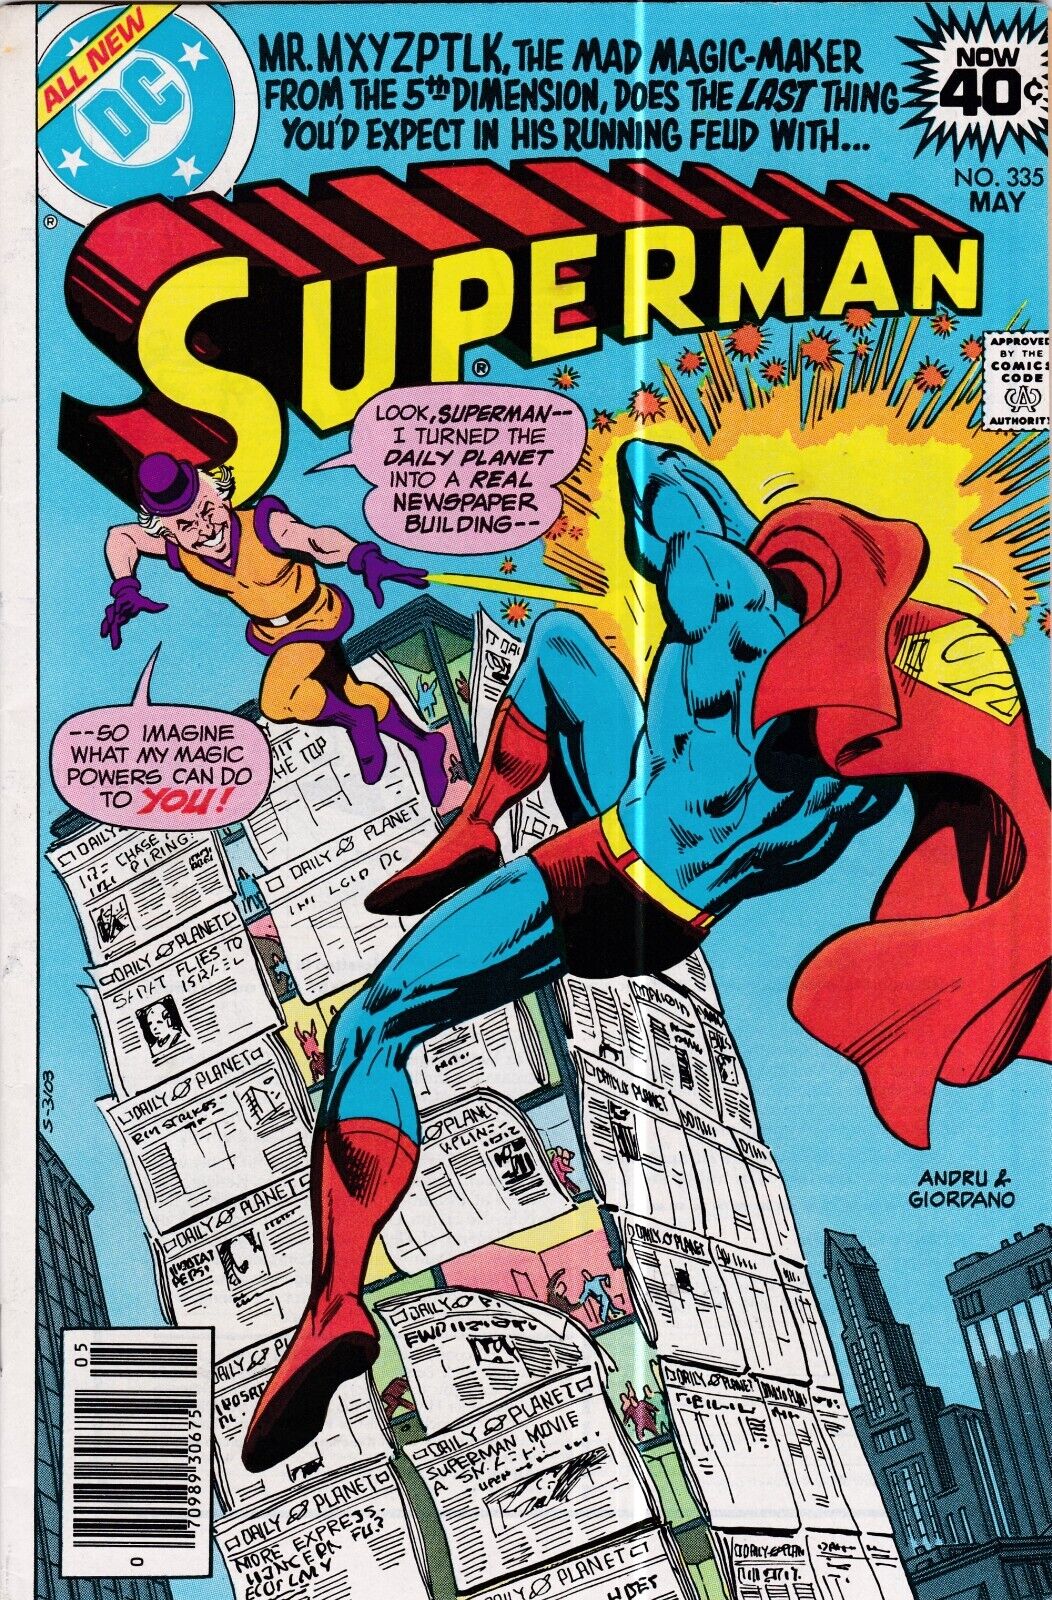 Superman #335:  DC Comics. (1979)  VF/NM   (9.0)